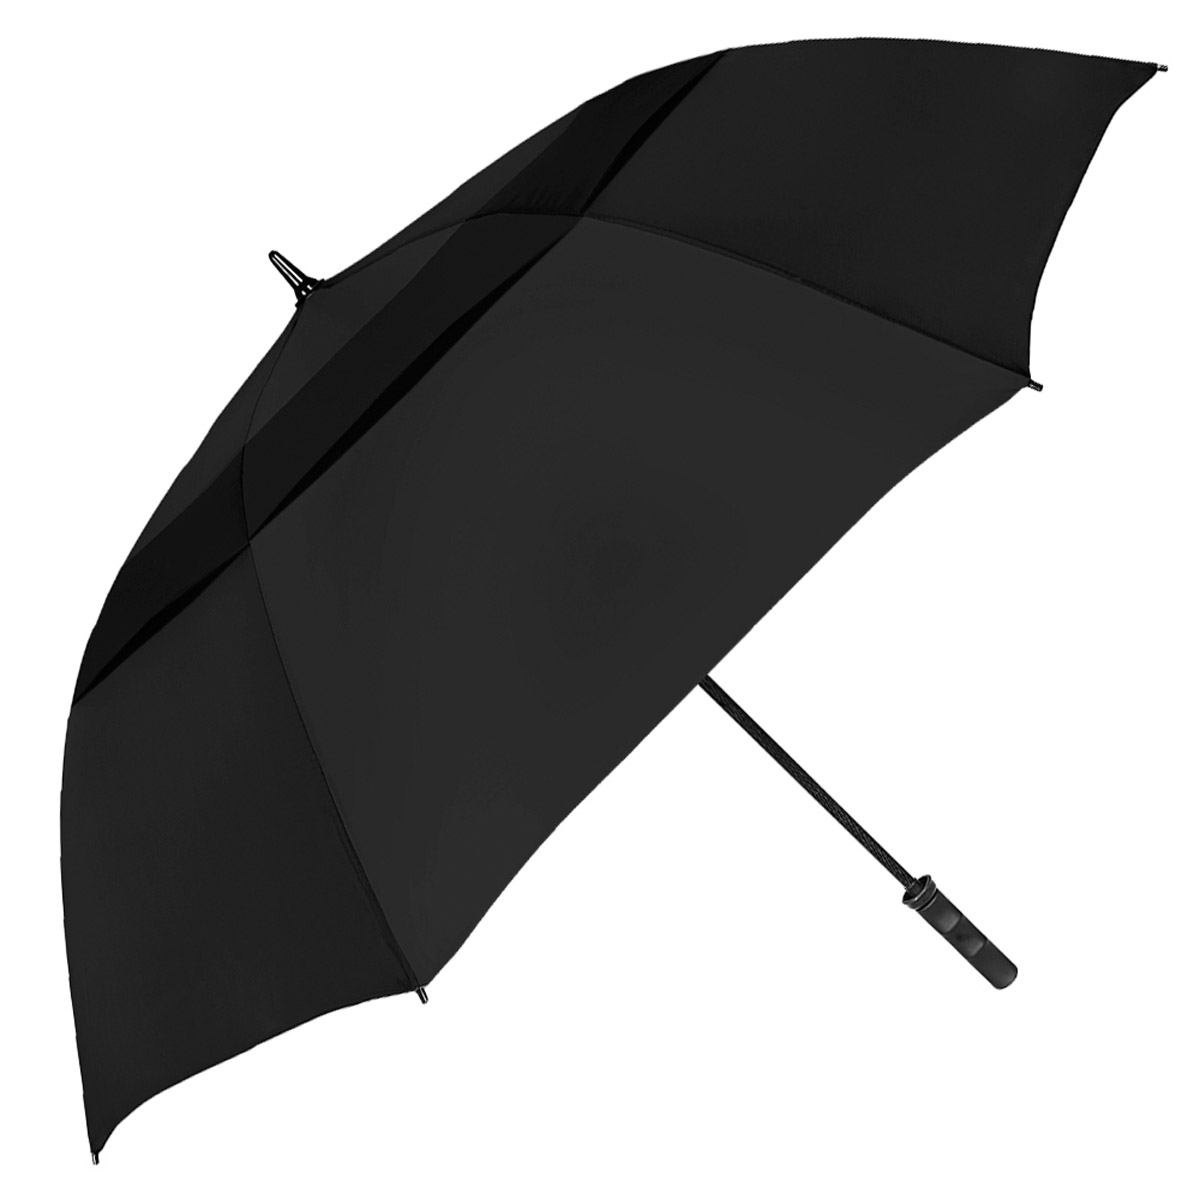 Black The Vented Tornado (TM) Umbrella